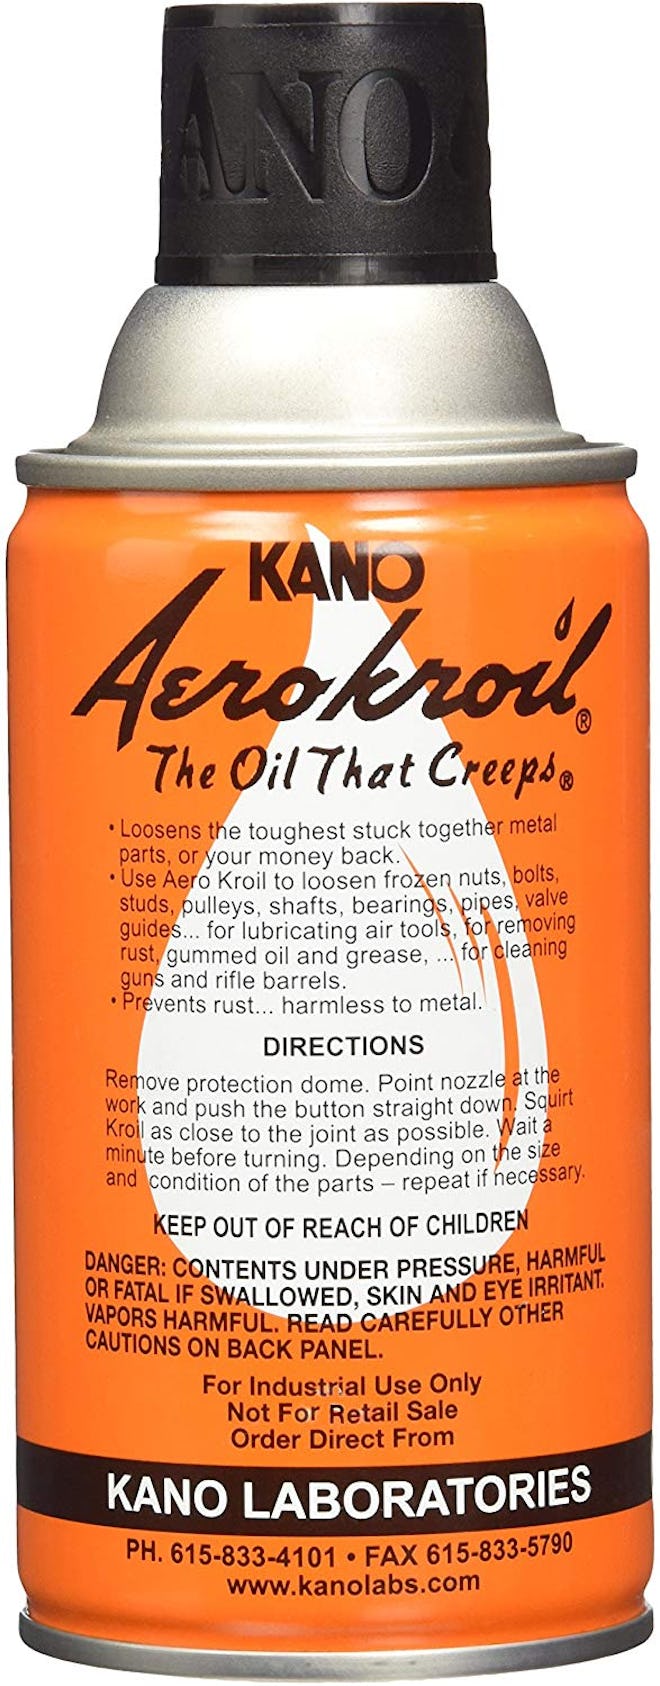 Kano Aerokroil Penetrating Oil, 10 oz.